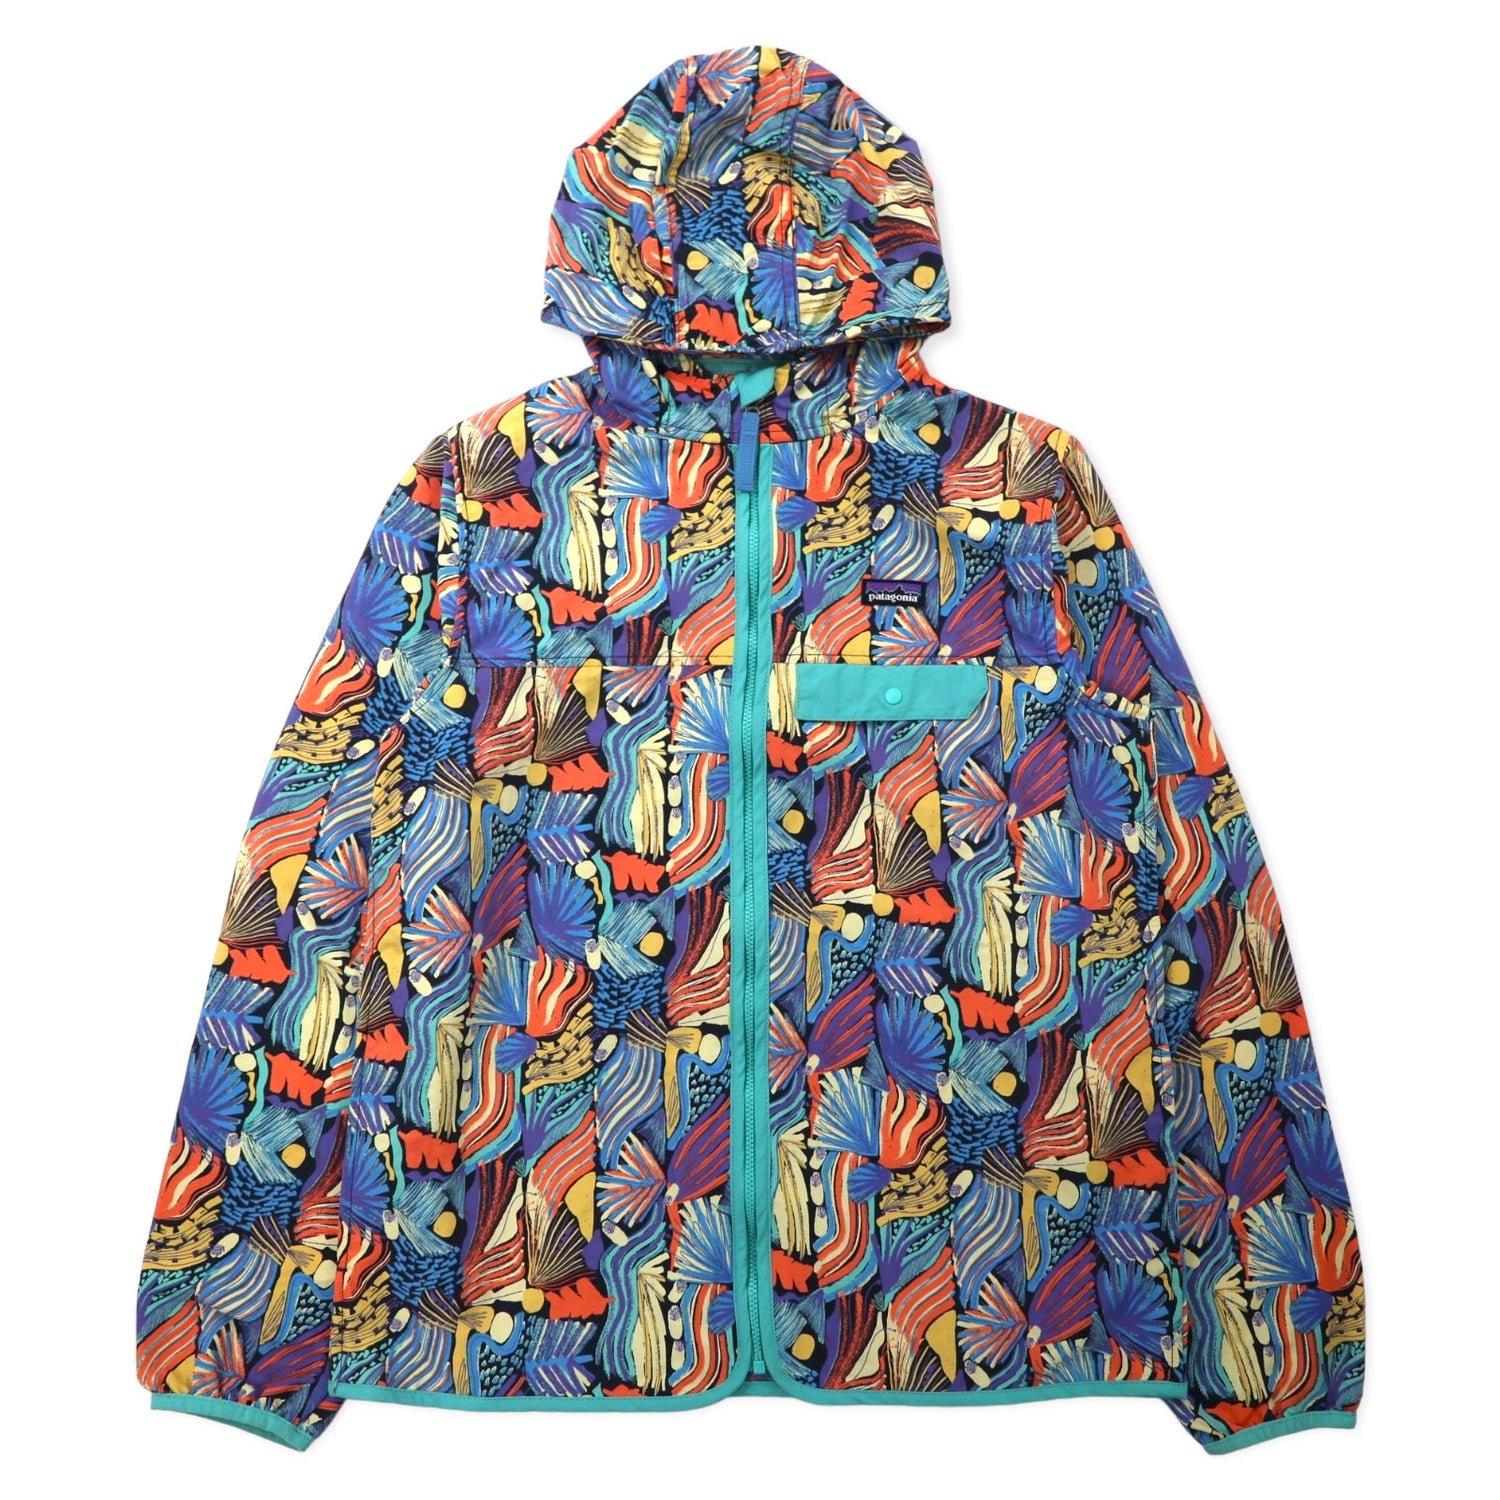 PATAGONIA Baggies Jacket Shell HOODIE XXL Multi Color Patterned